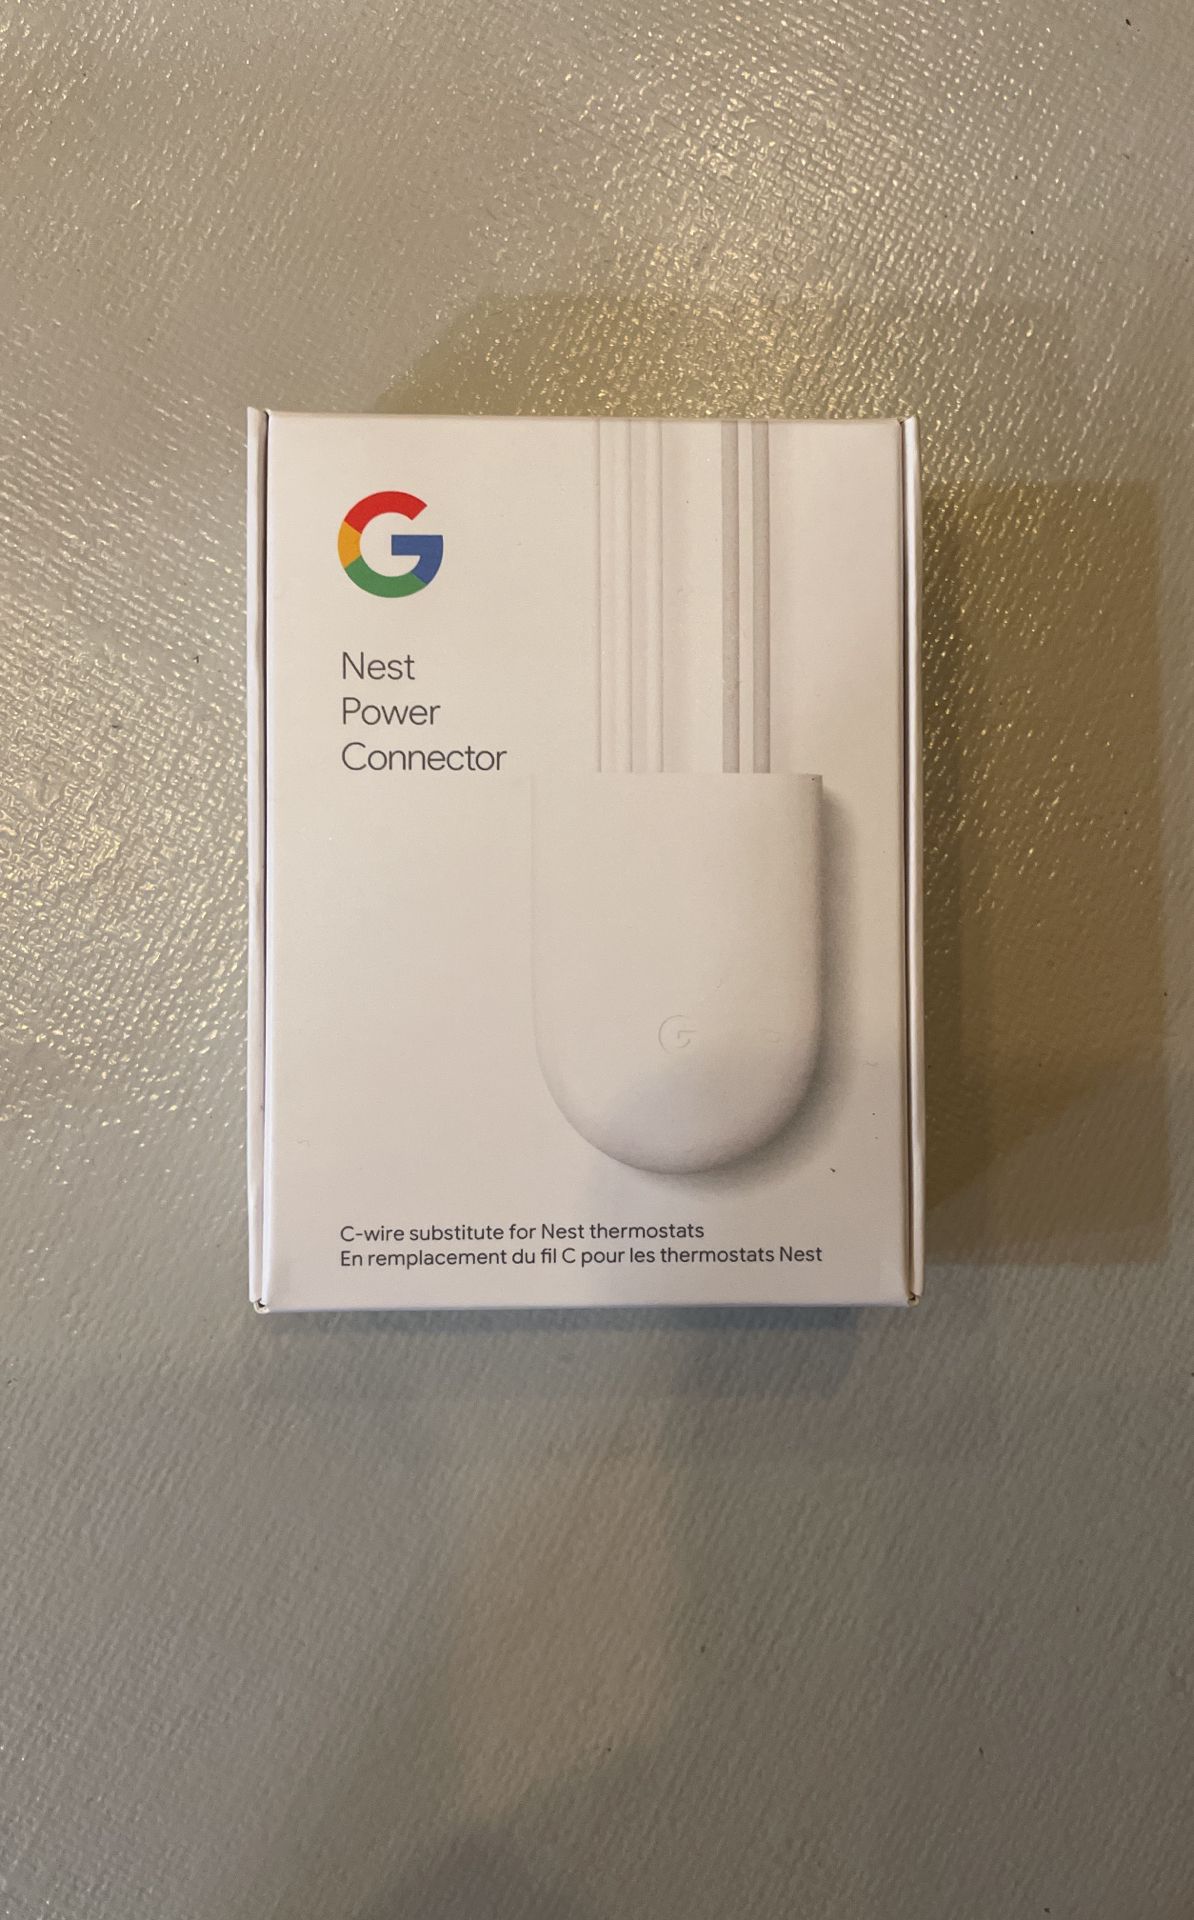 Brand New Google Nest Power Connector 